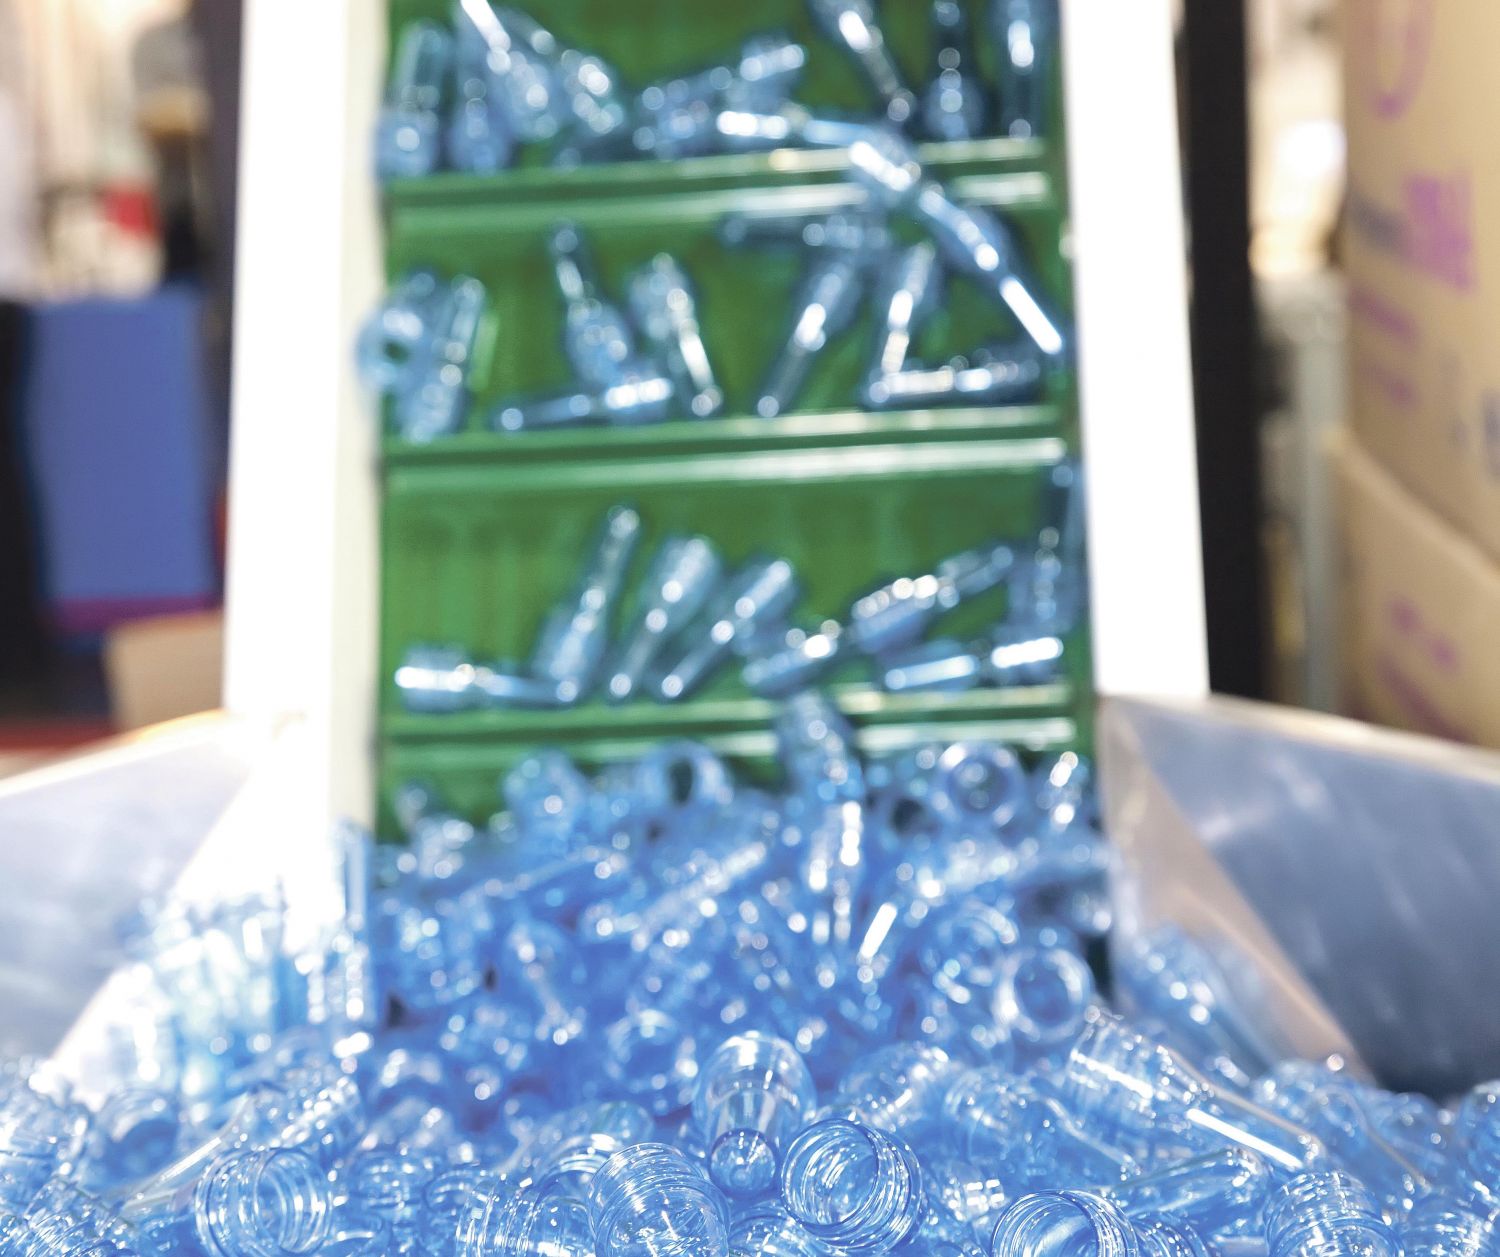 Plastikflaschen werden recycelt. Thema PET-Recycling